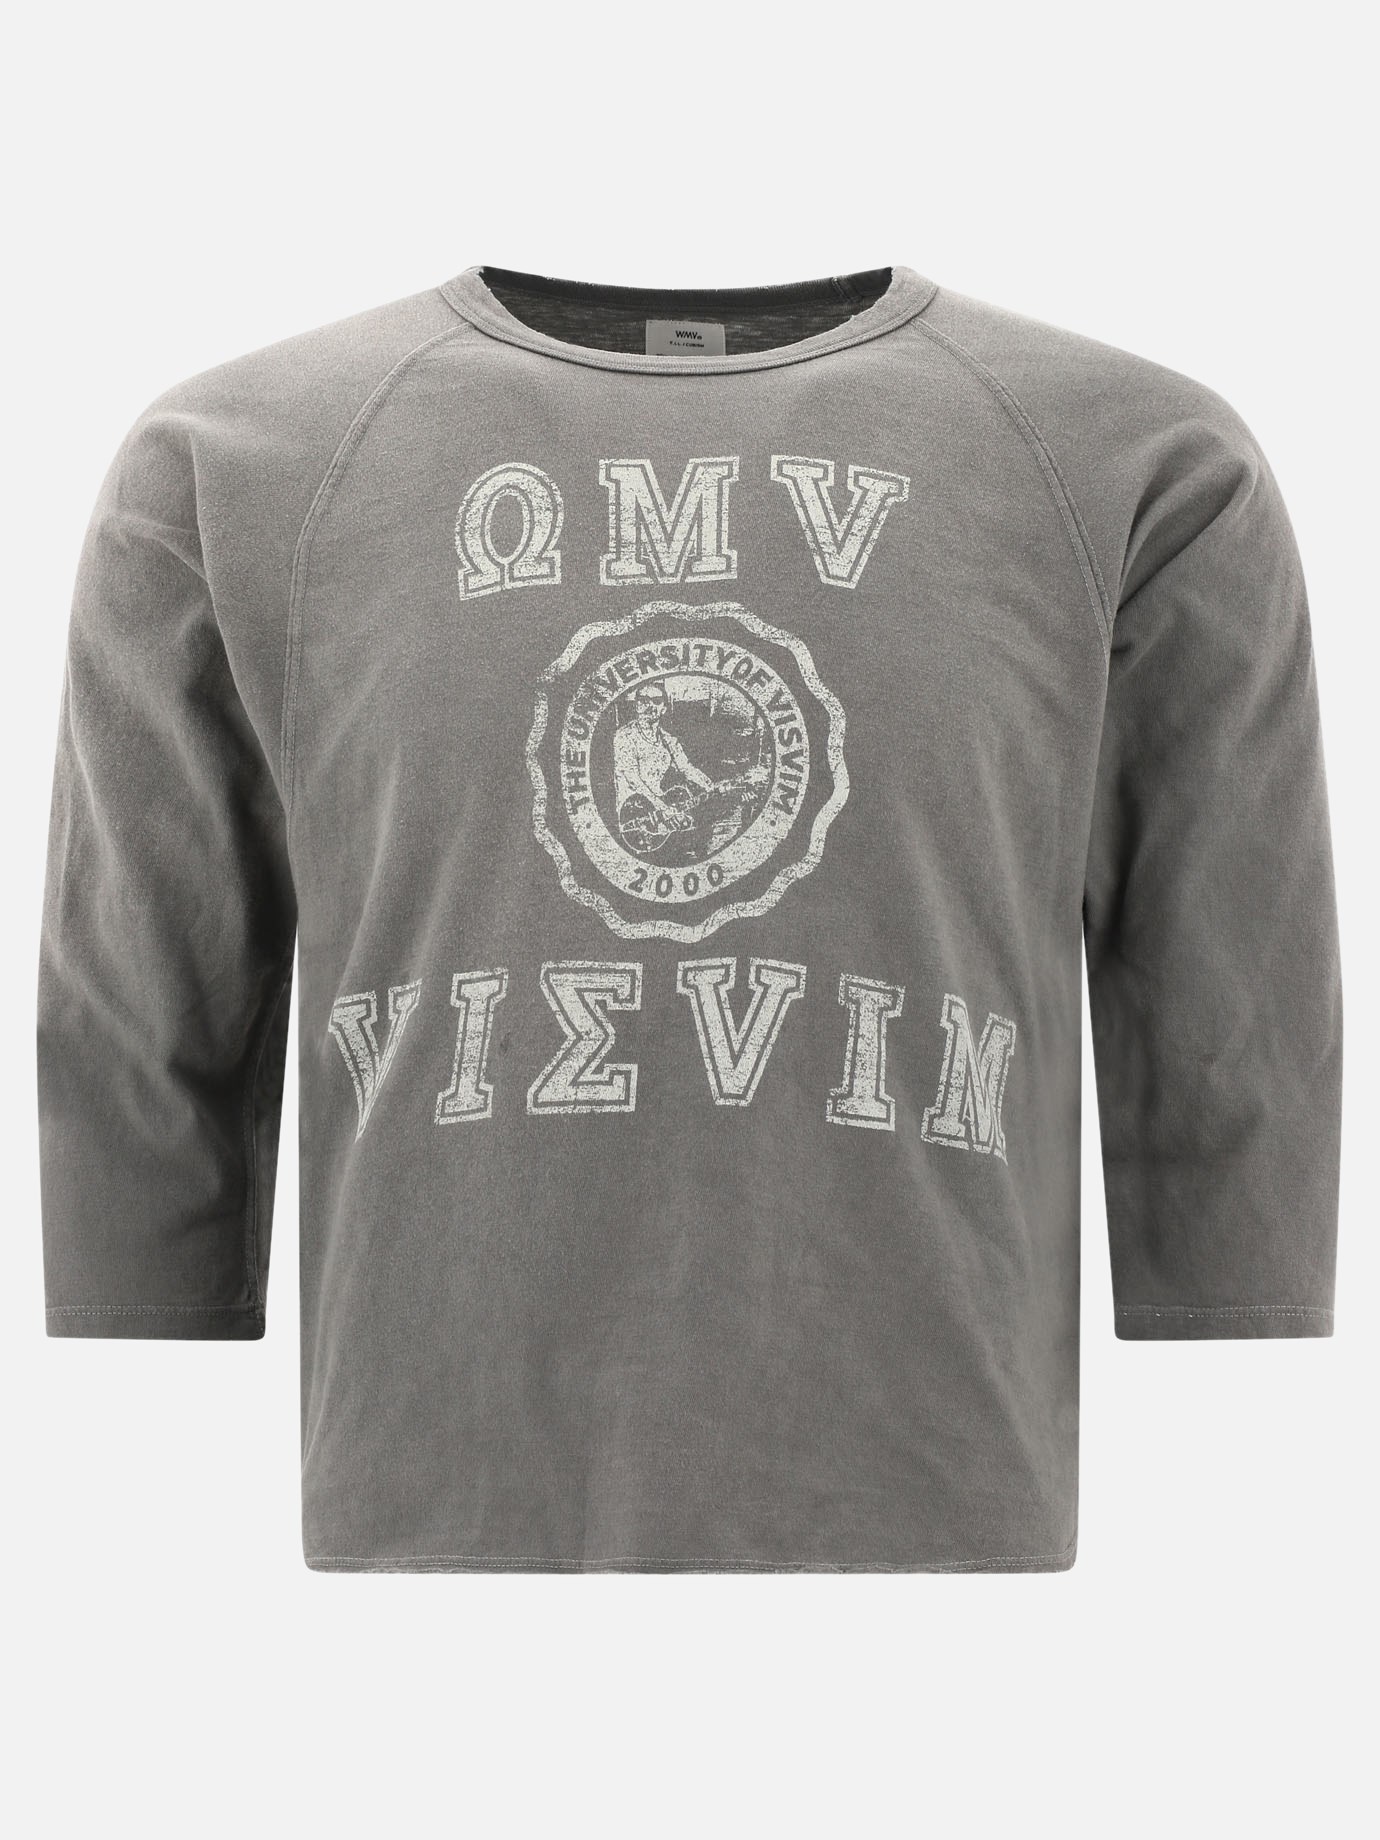  Gridiron  t-shirtby Visvim - 3